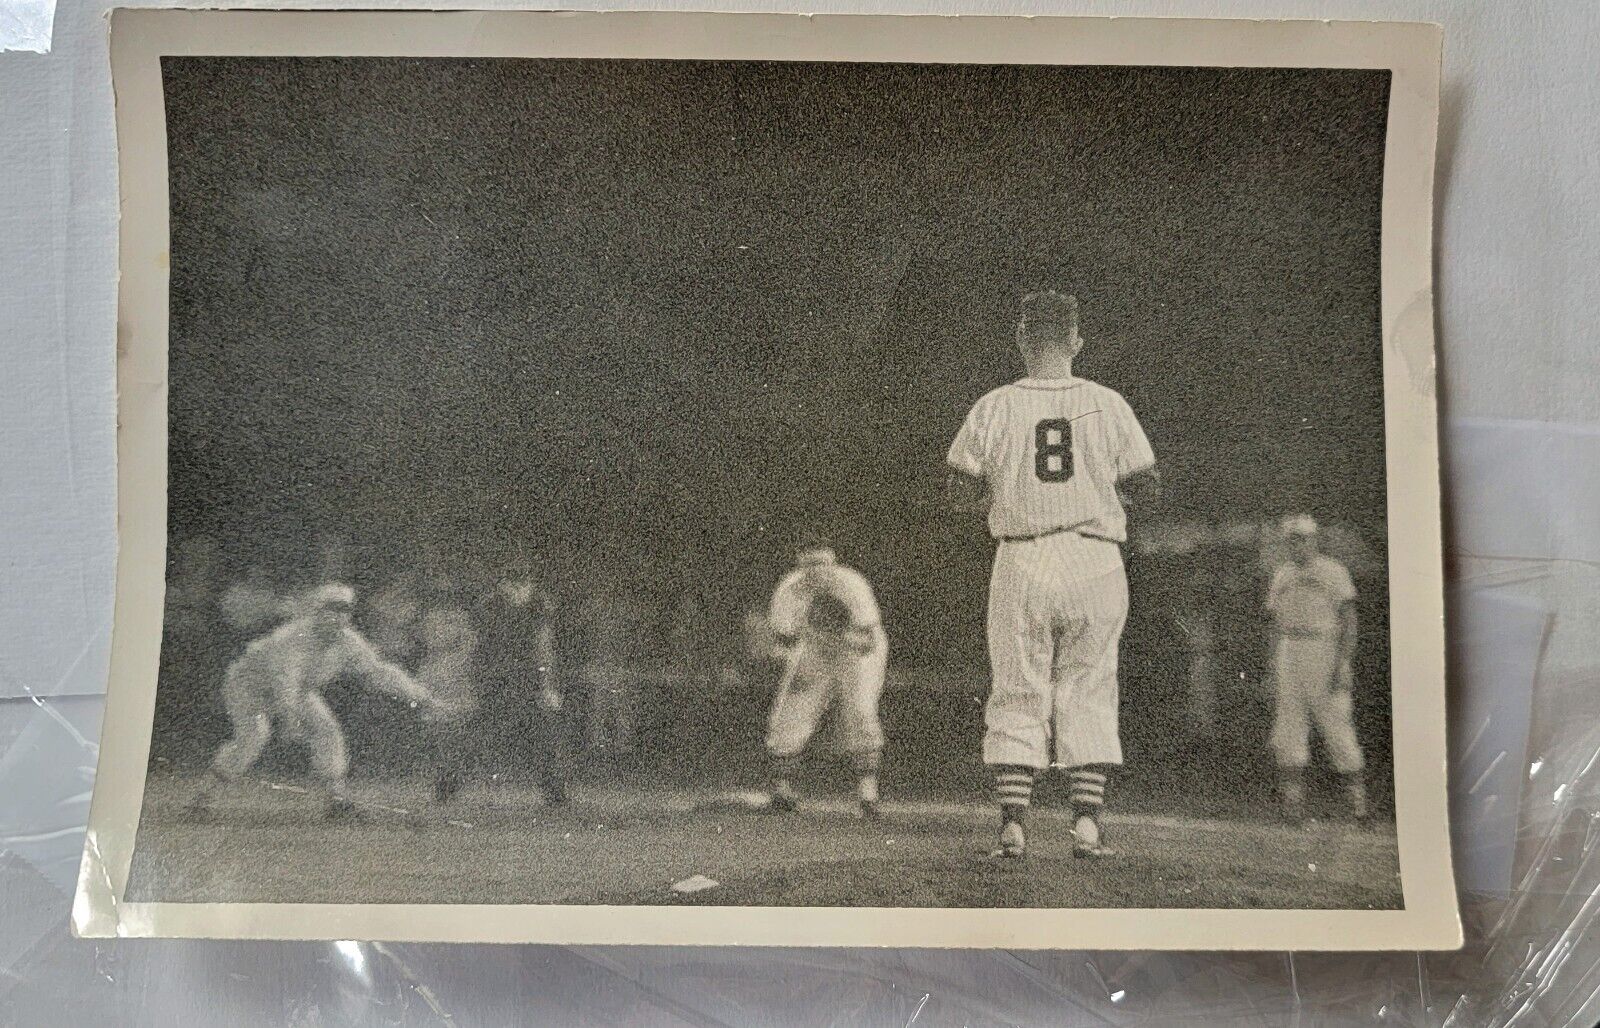 (1) Original night photo of NYC Yankee team players one wearing uniform #8